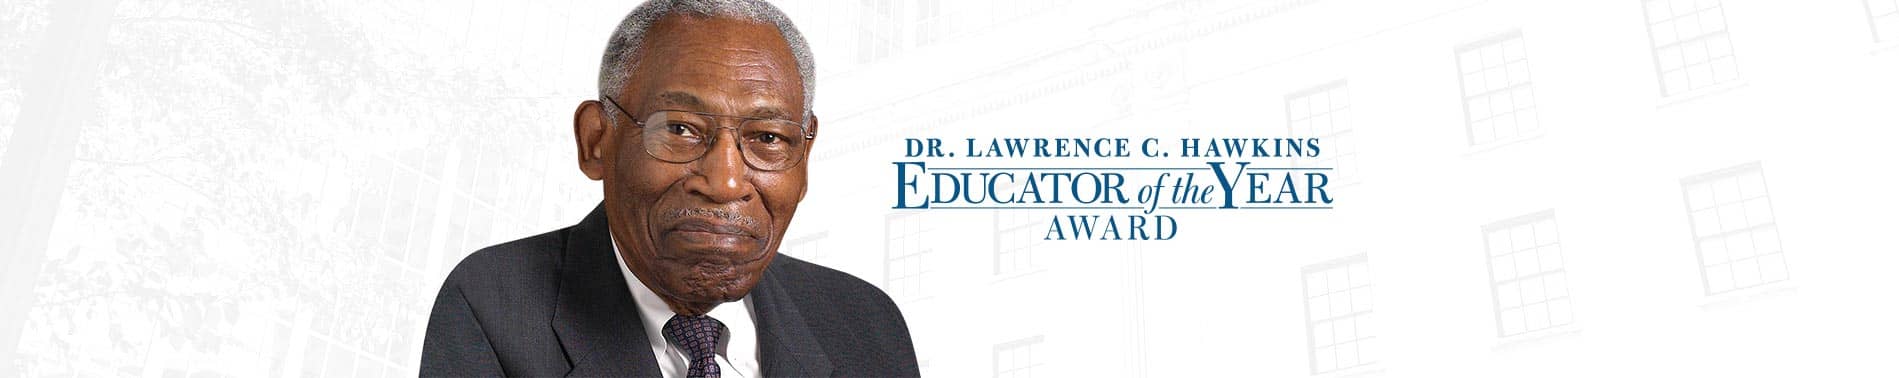 Dr. Lawrence C. Hawkins Educator of the Year Award